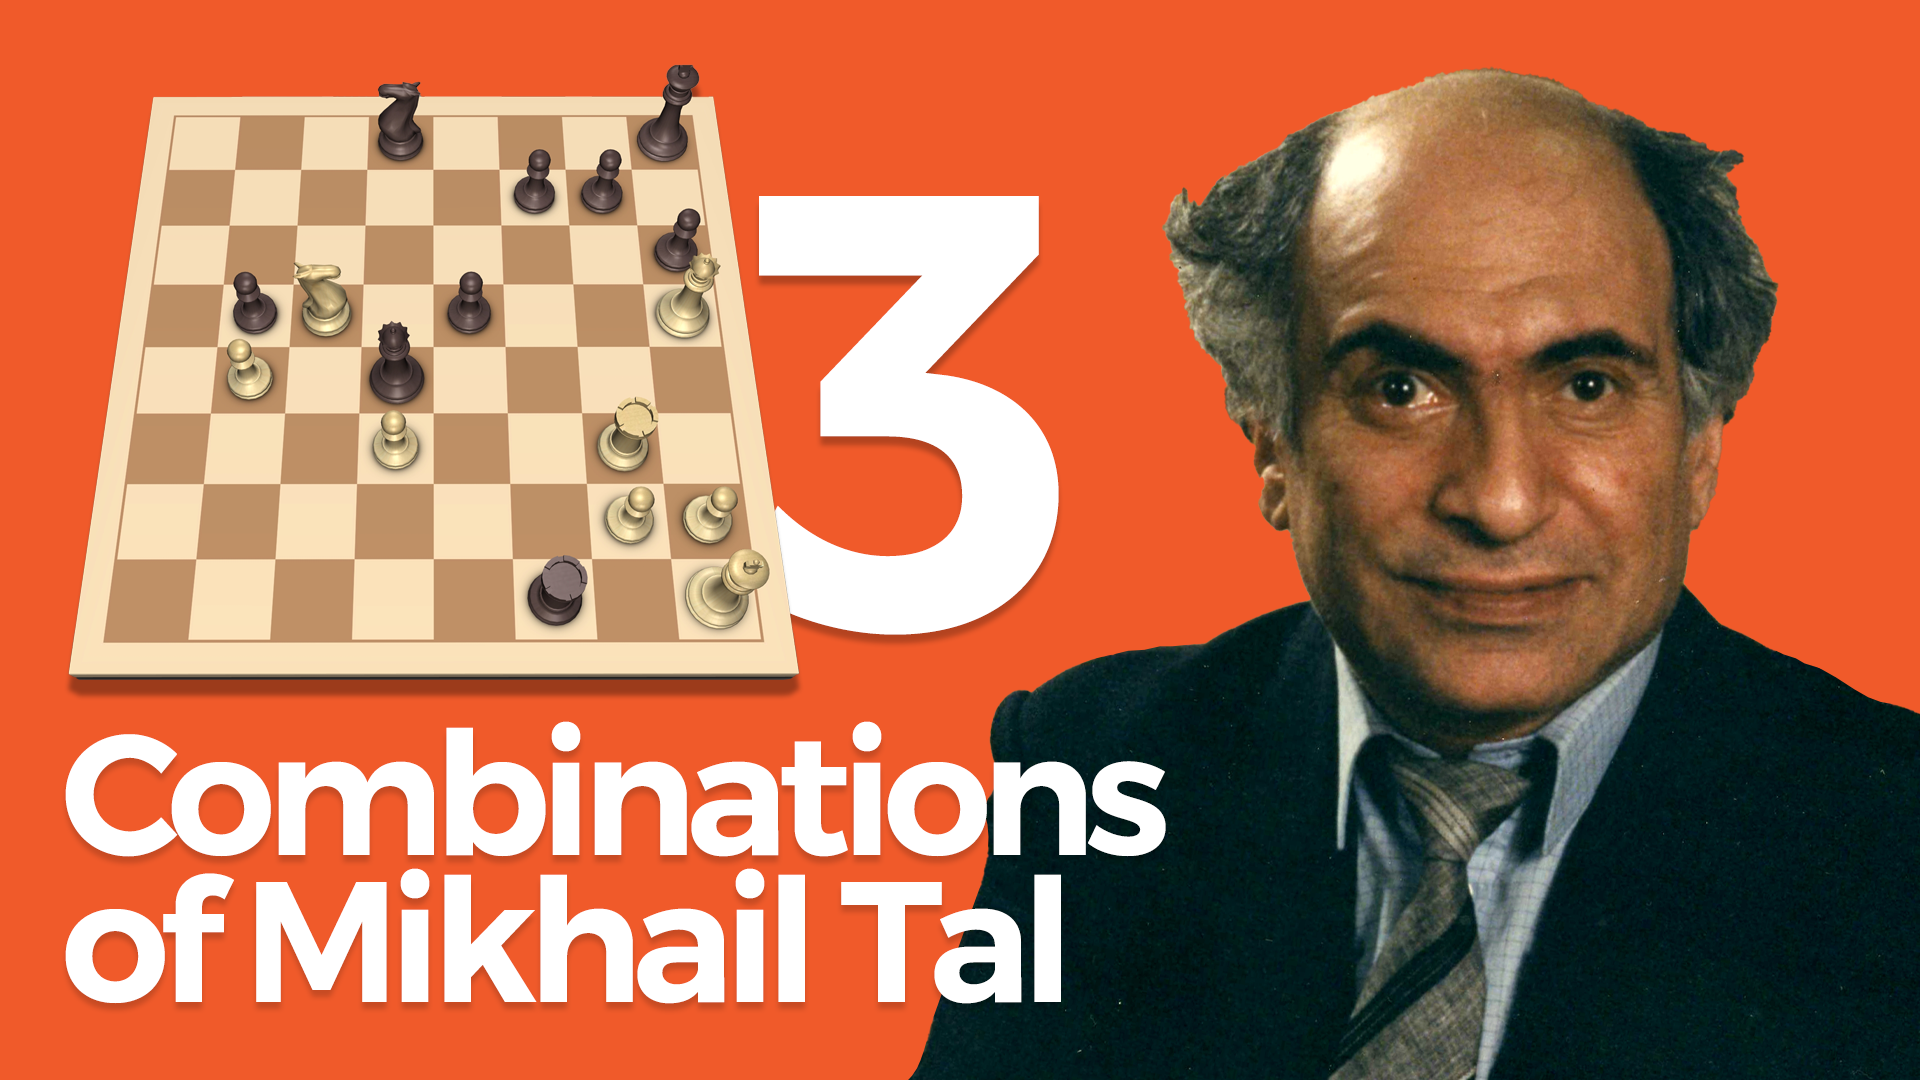 Mikhail .Tal's.winning - Chess.combinations